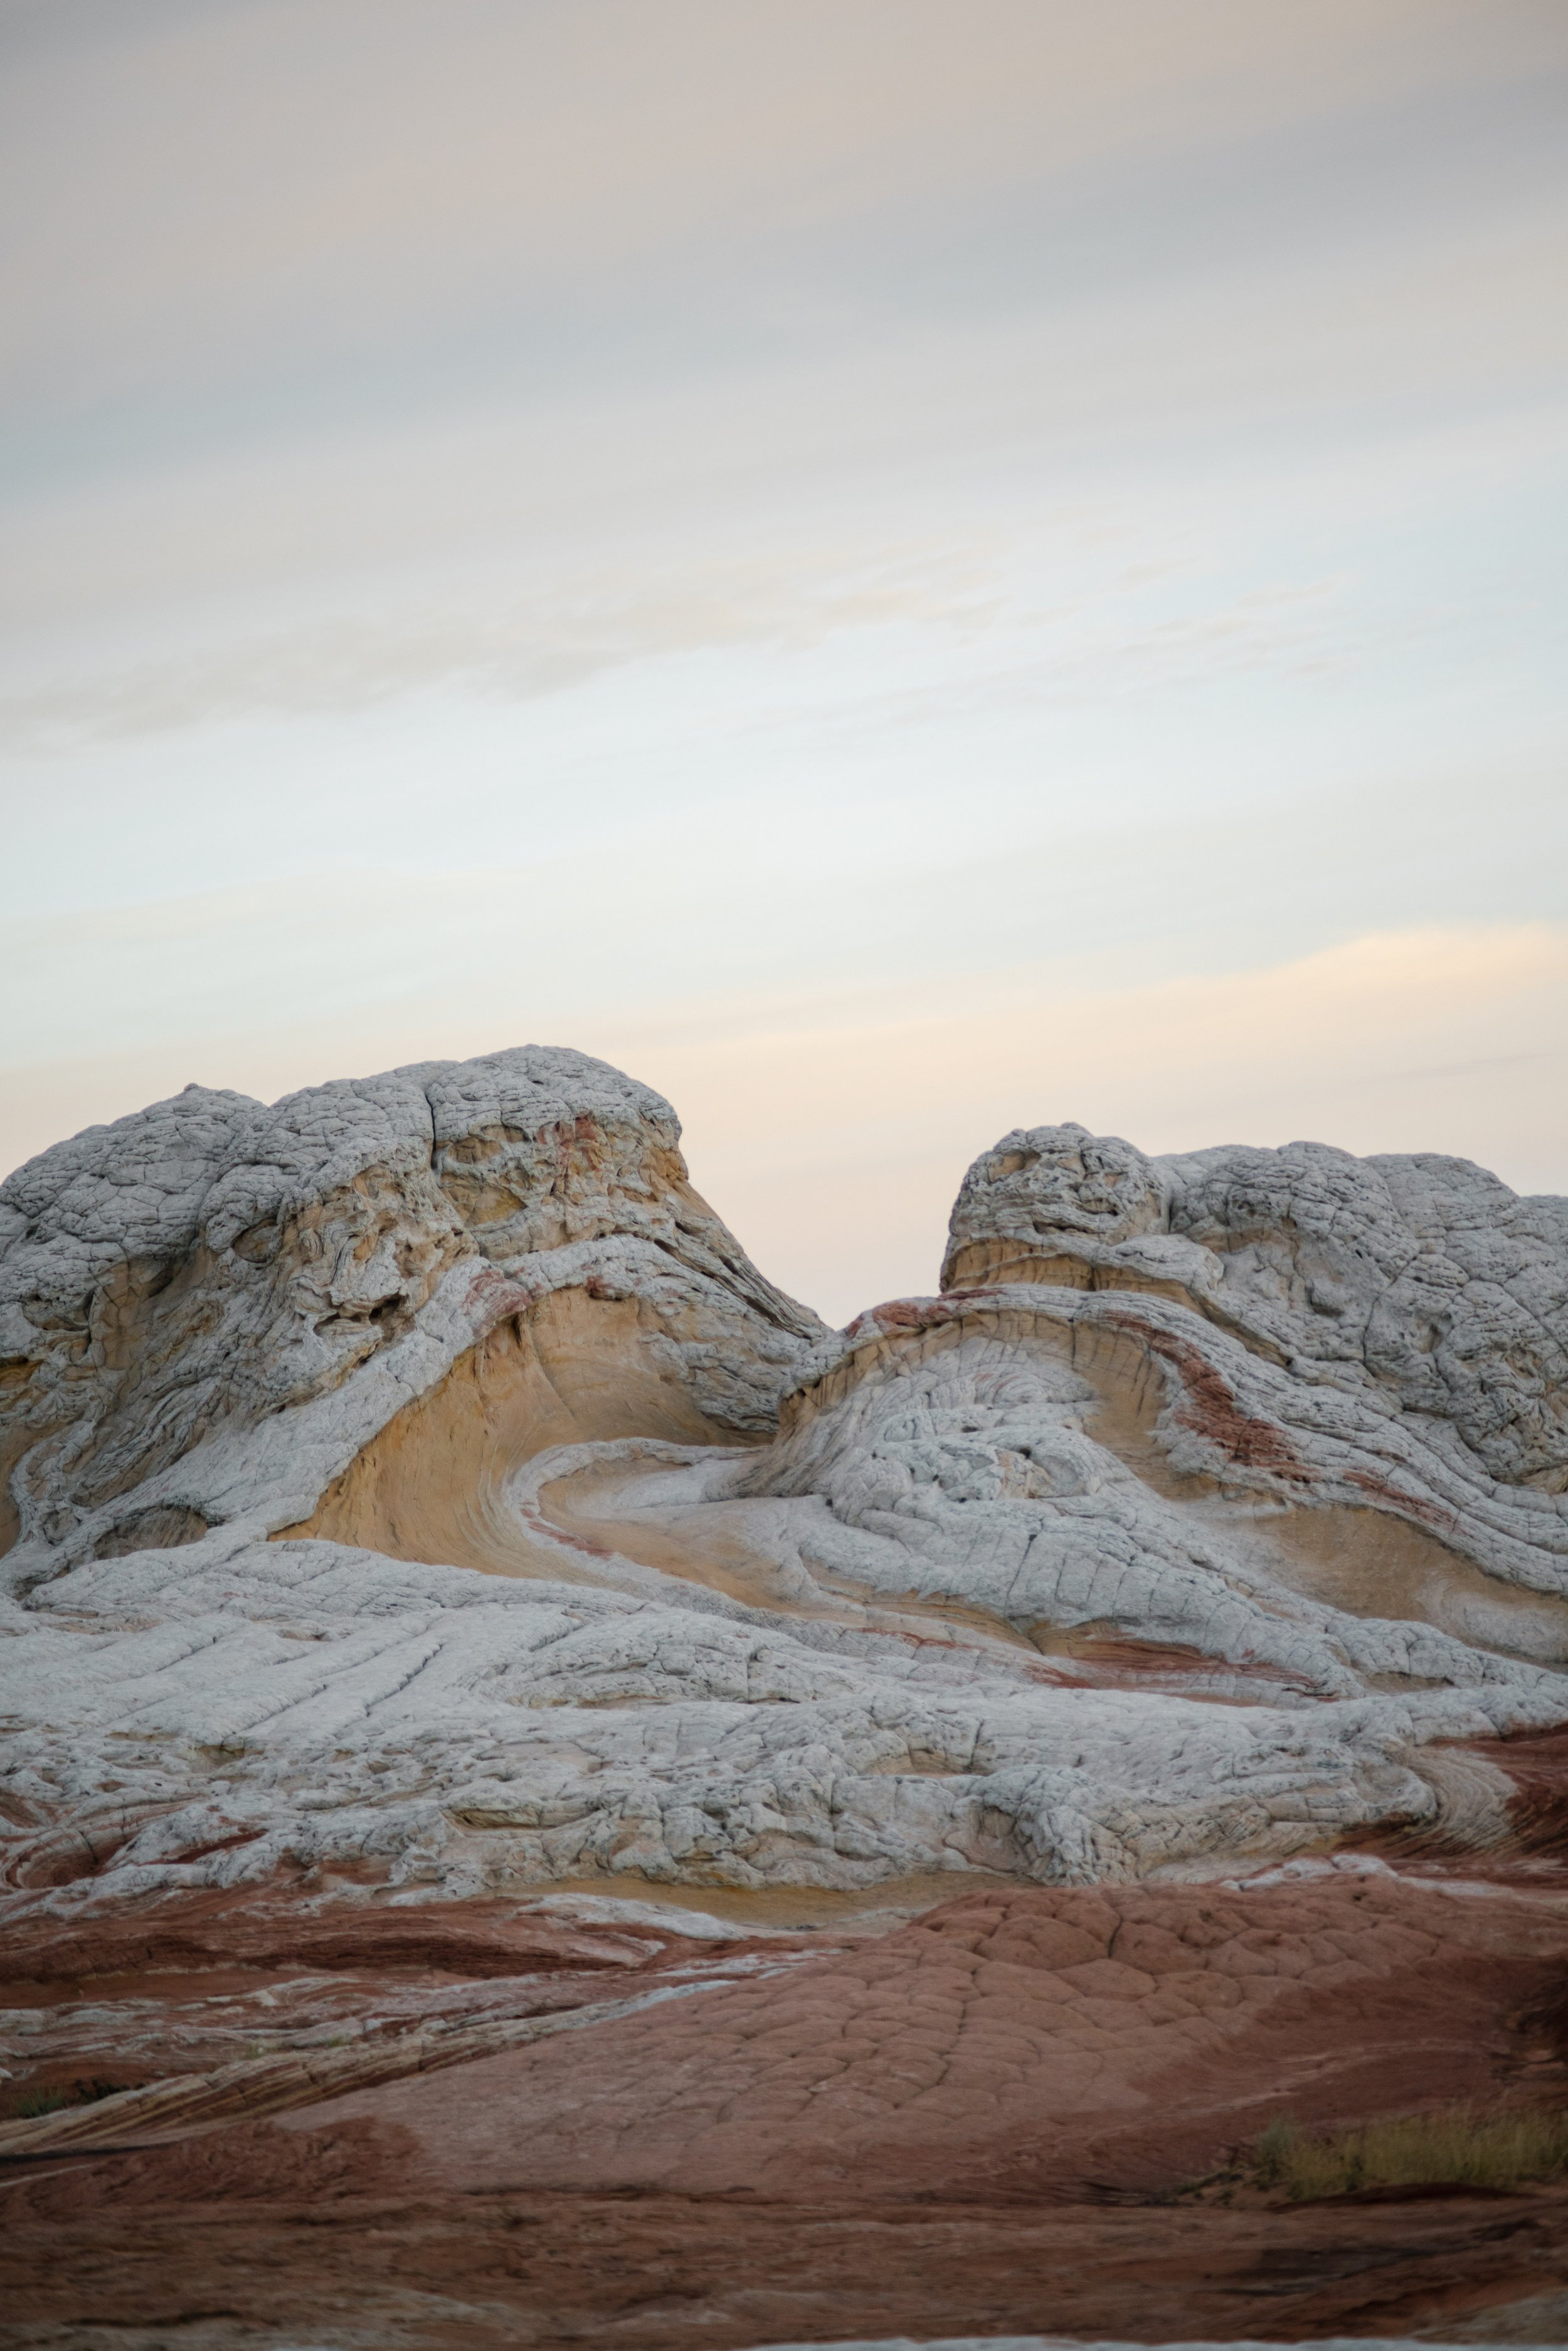  White Pocket Arizona at Sunrise by Evan Anderson 